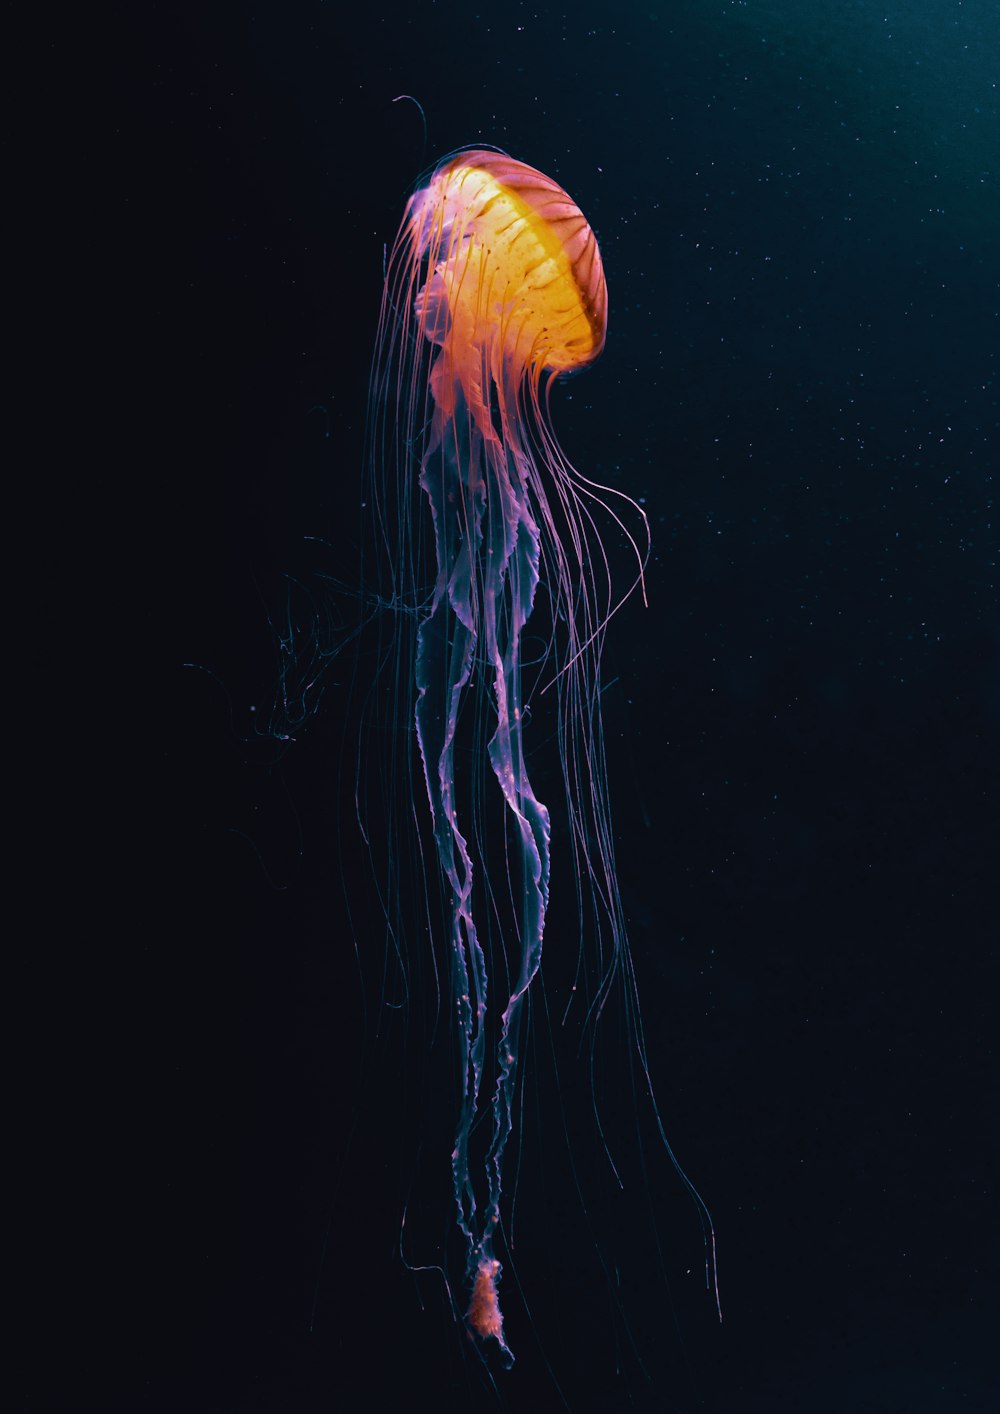 orange jellyfish in water during daytime